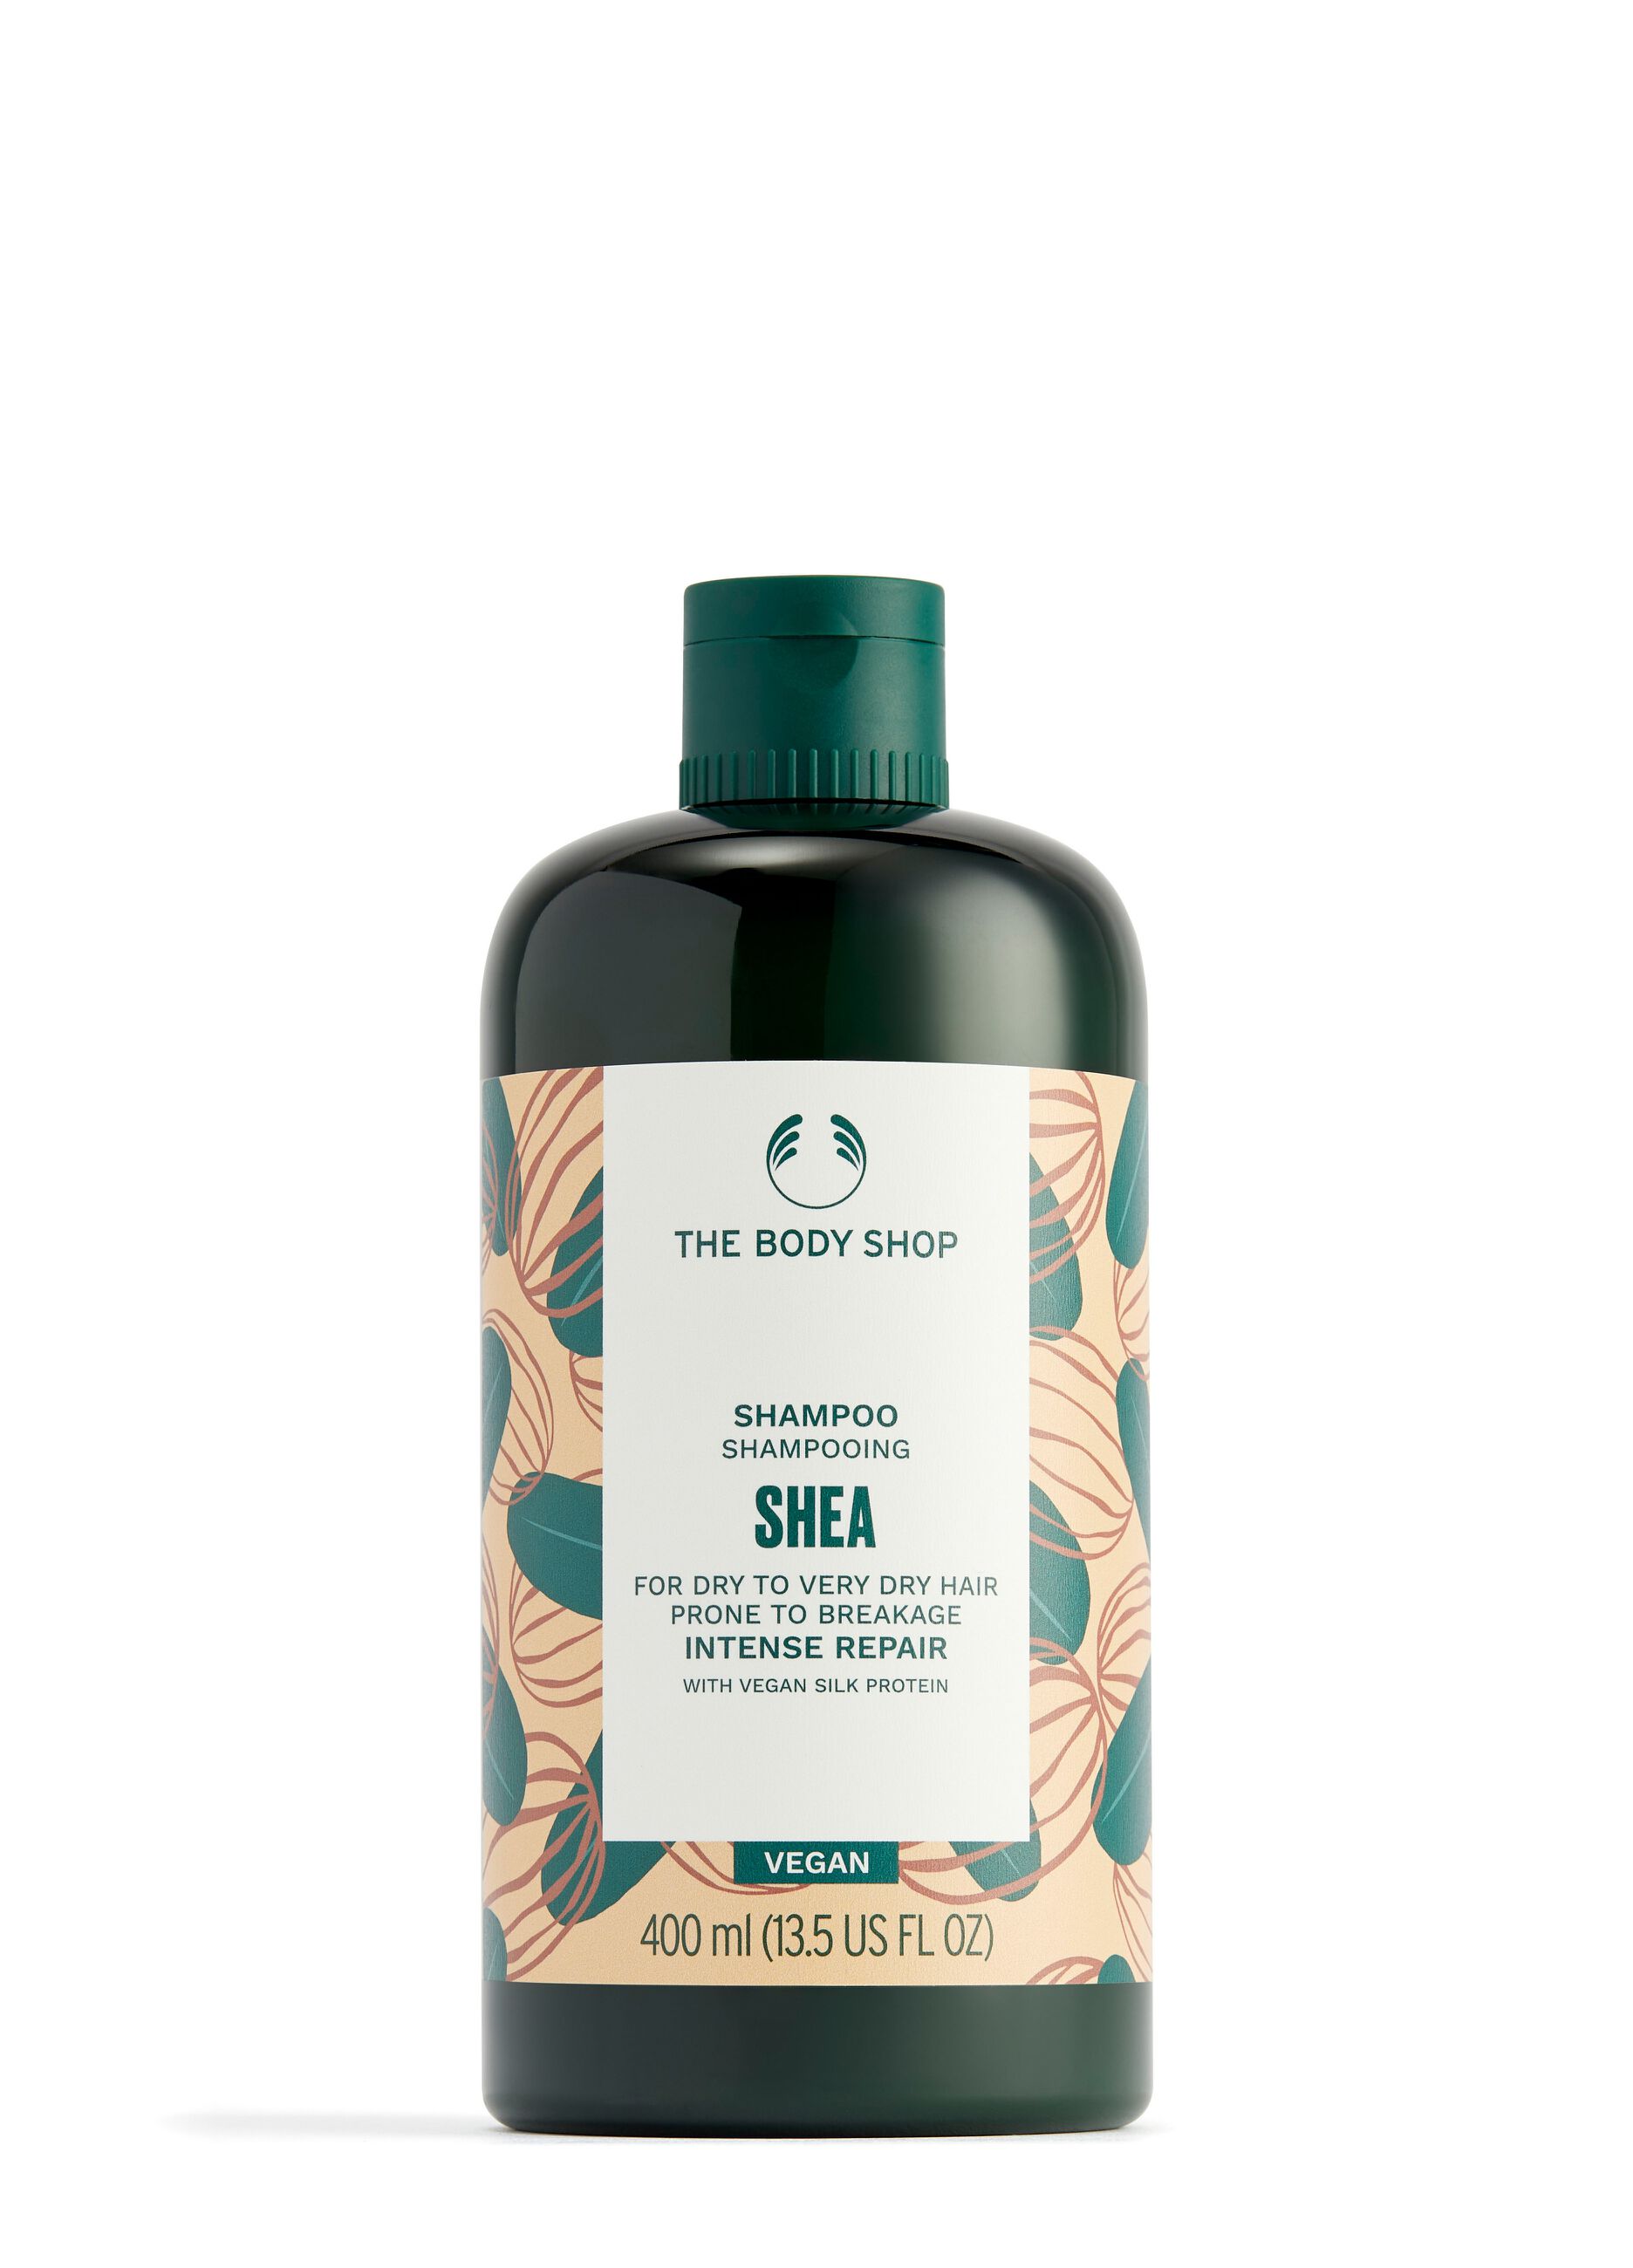 The Body Shop Shea butter restorative shampoo 400ml